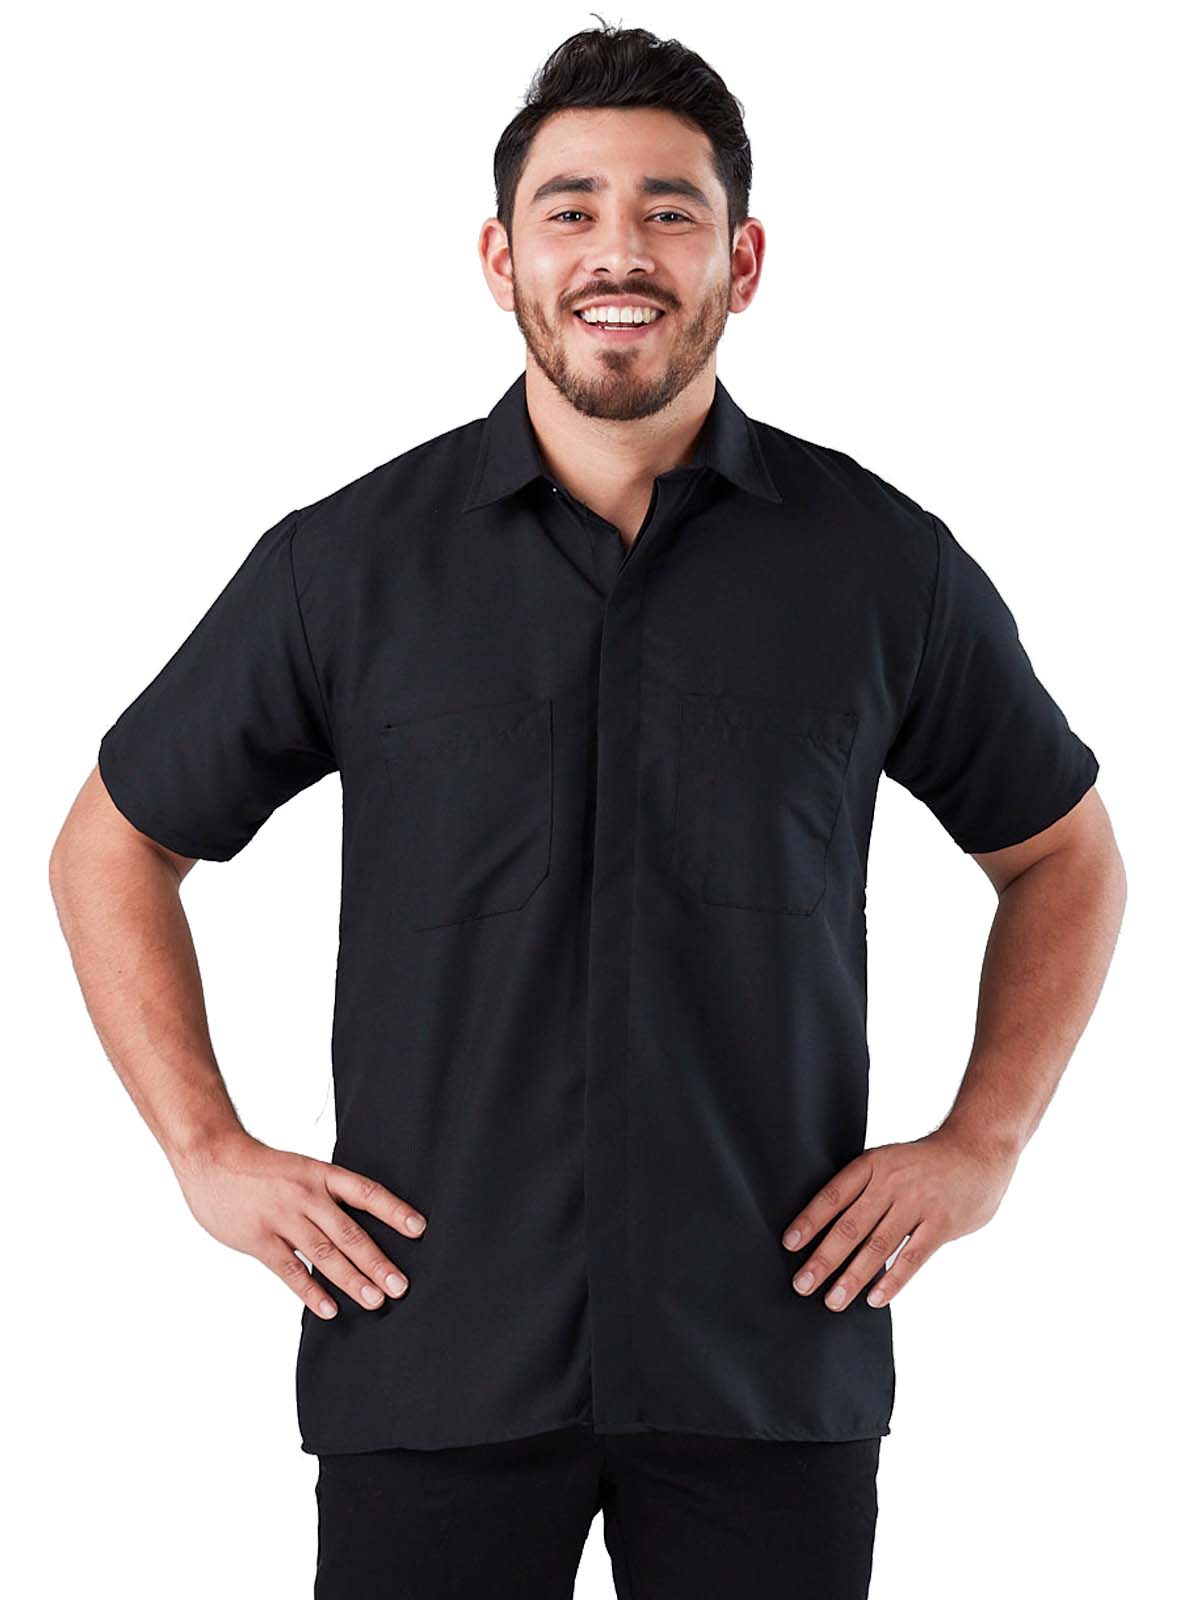 Ripstop Industrial shirt black